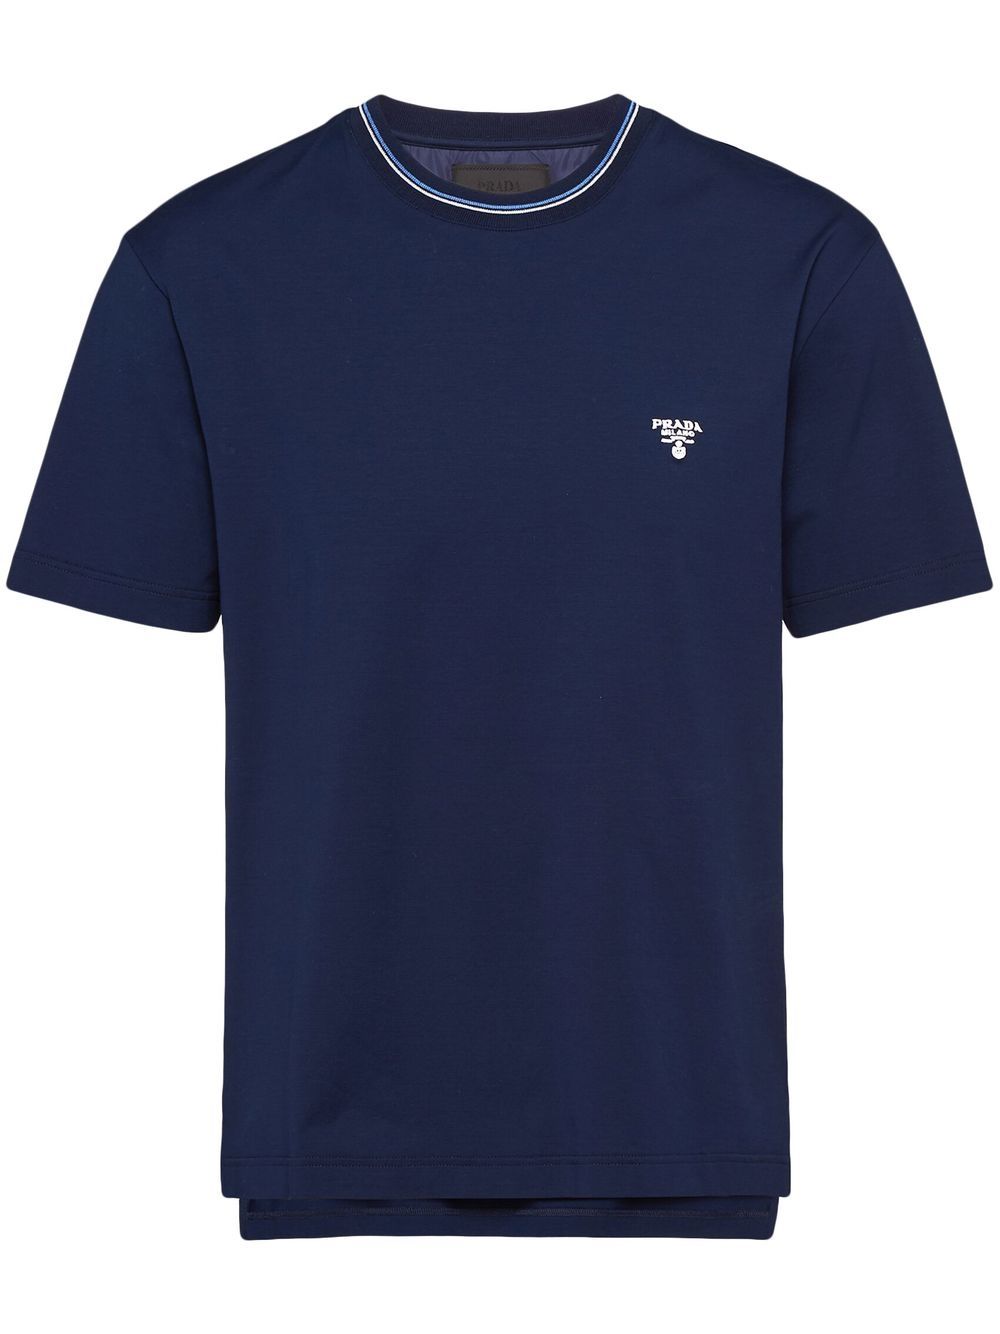 Prada Embroidered Logo T-shirt Navy Blue/White - SS22 - US